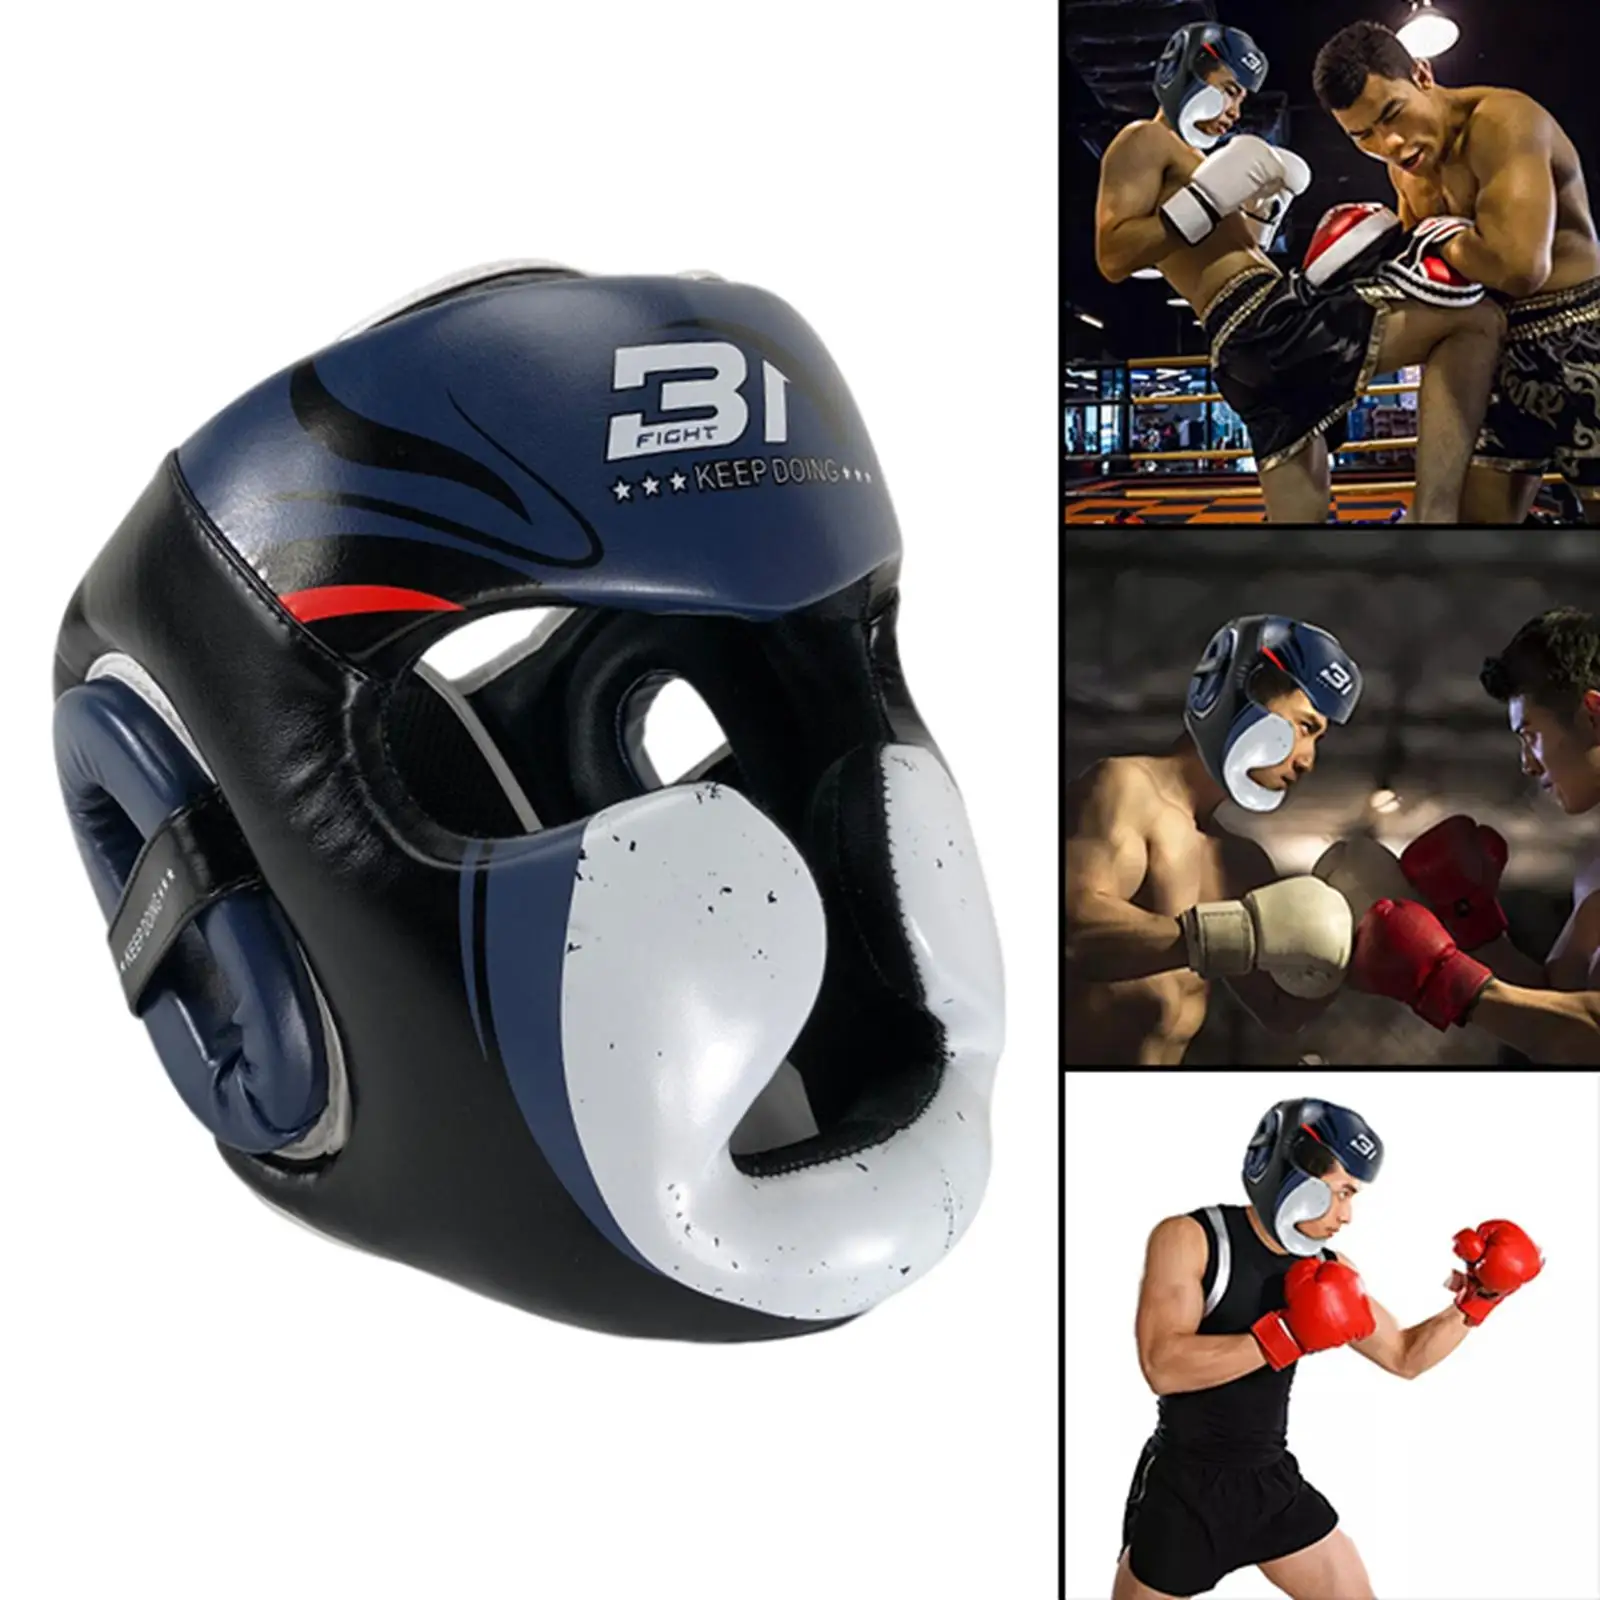 Kids/Youth/Adults Adults Women Men Boxing Helmets MMA Muay Thai Sanda Karate Taekwondo Head Gear Protector